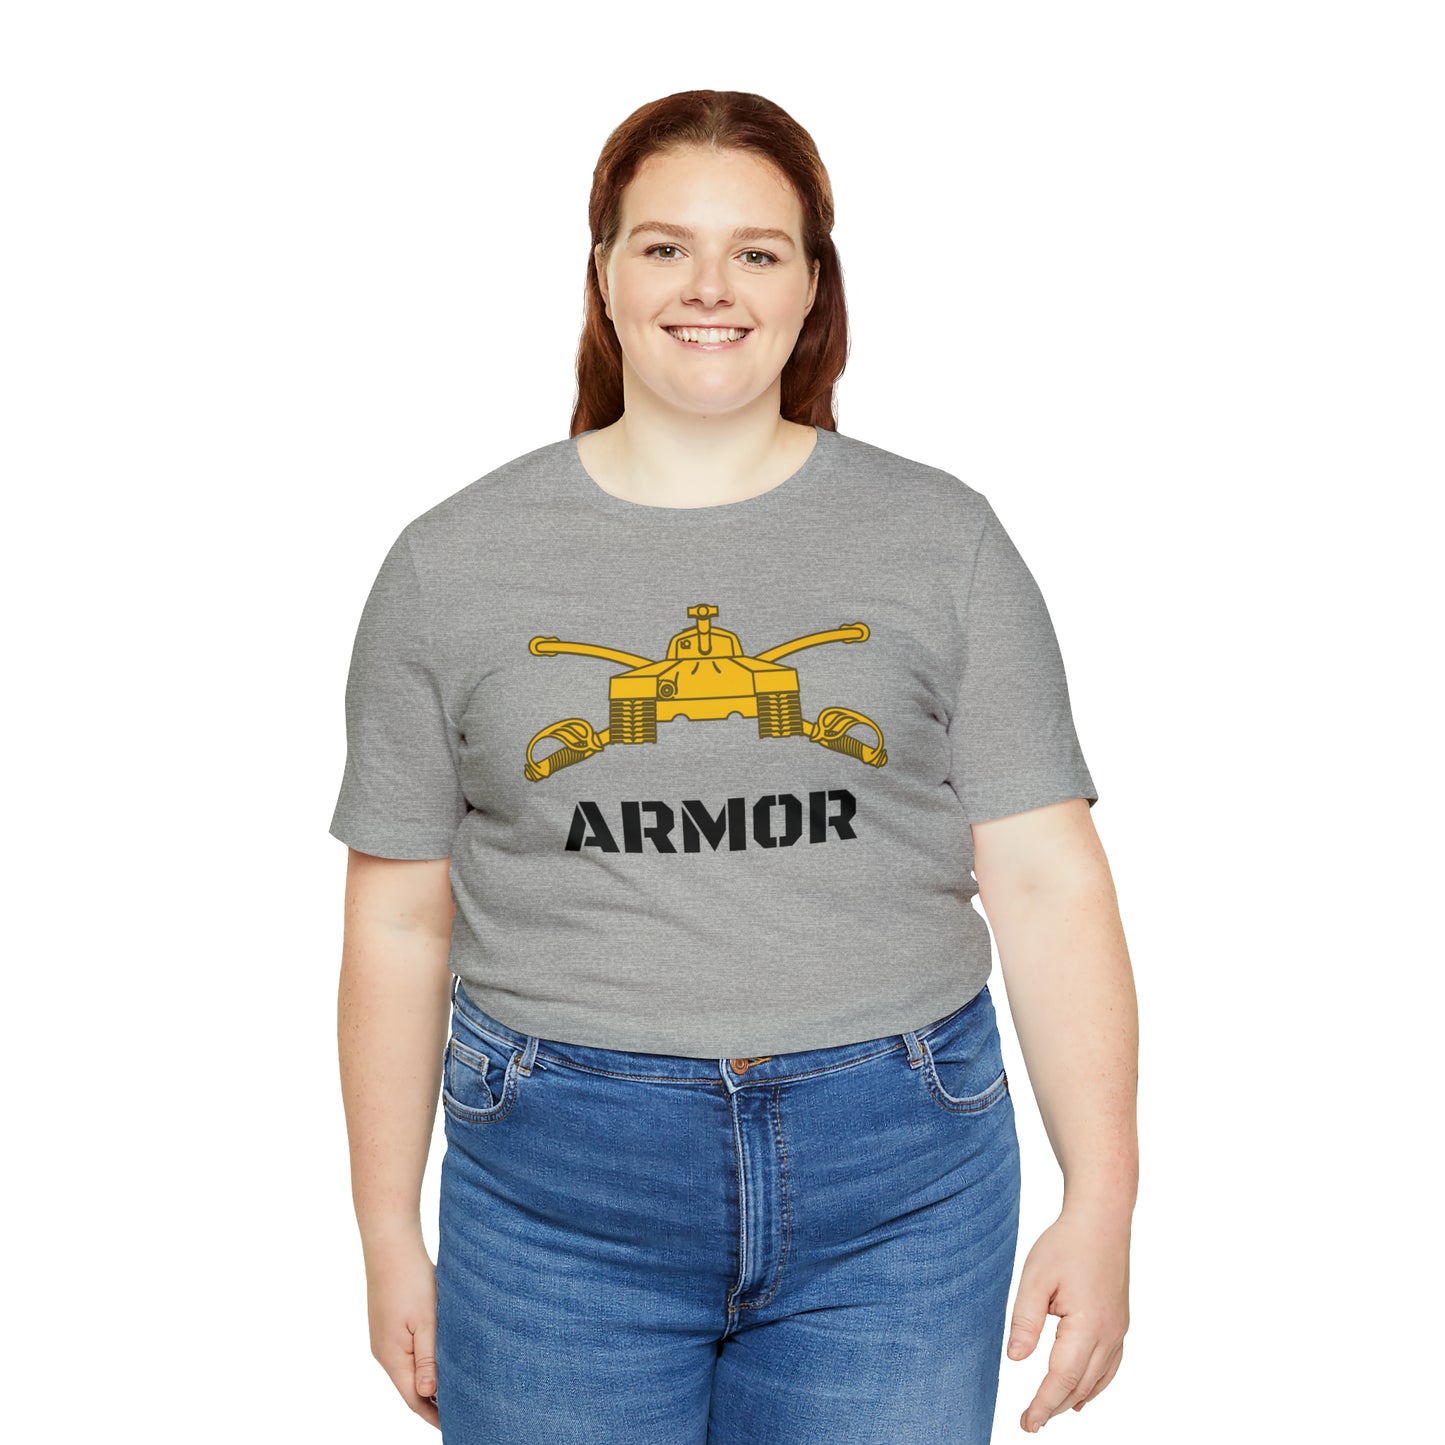 US Army Armor T-Shirt Military